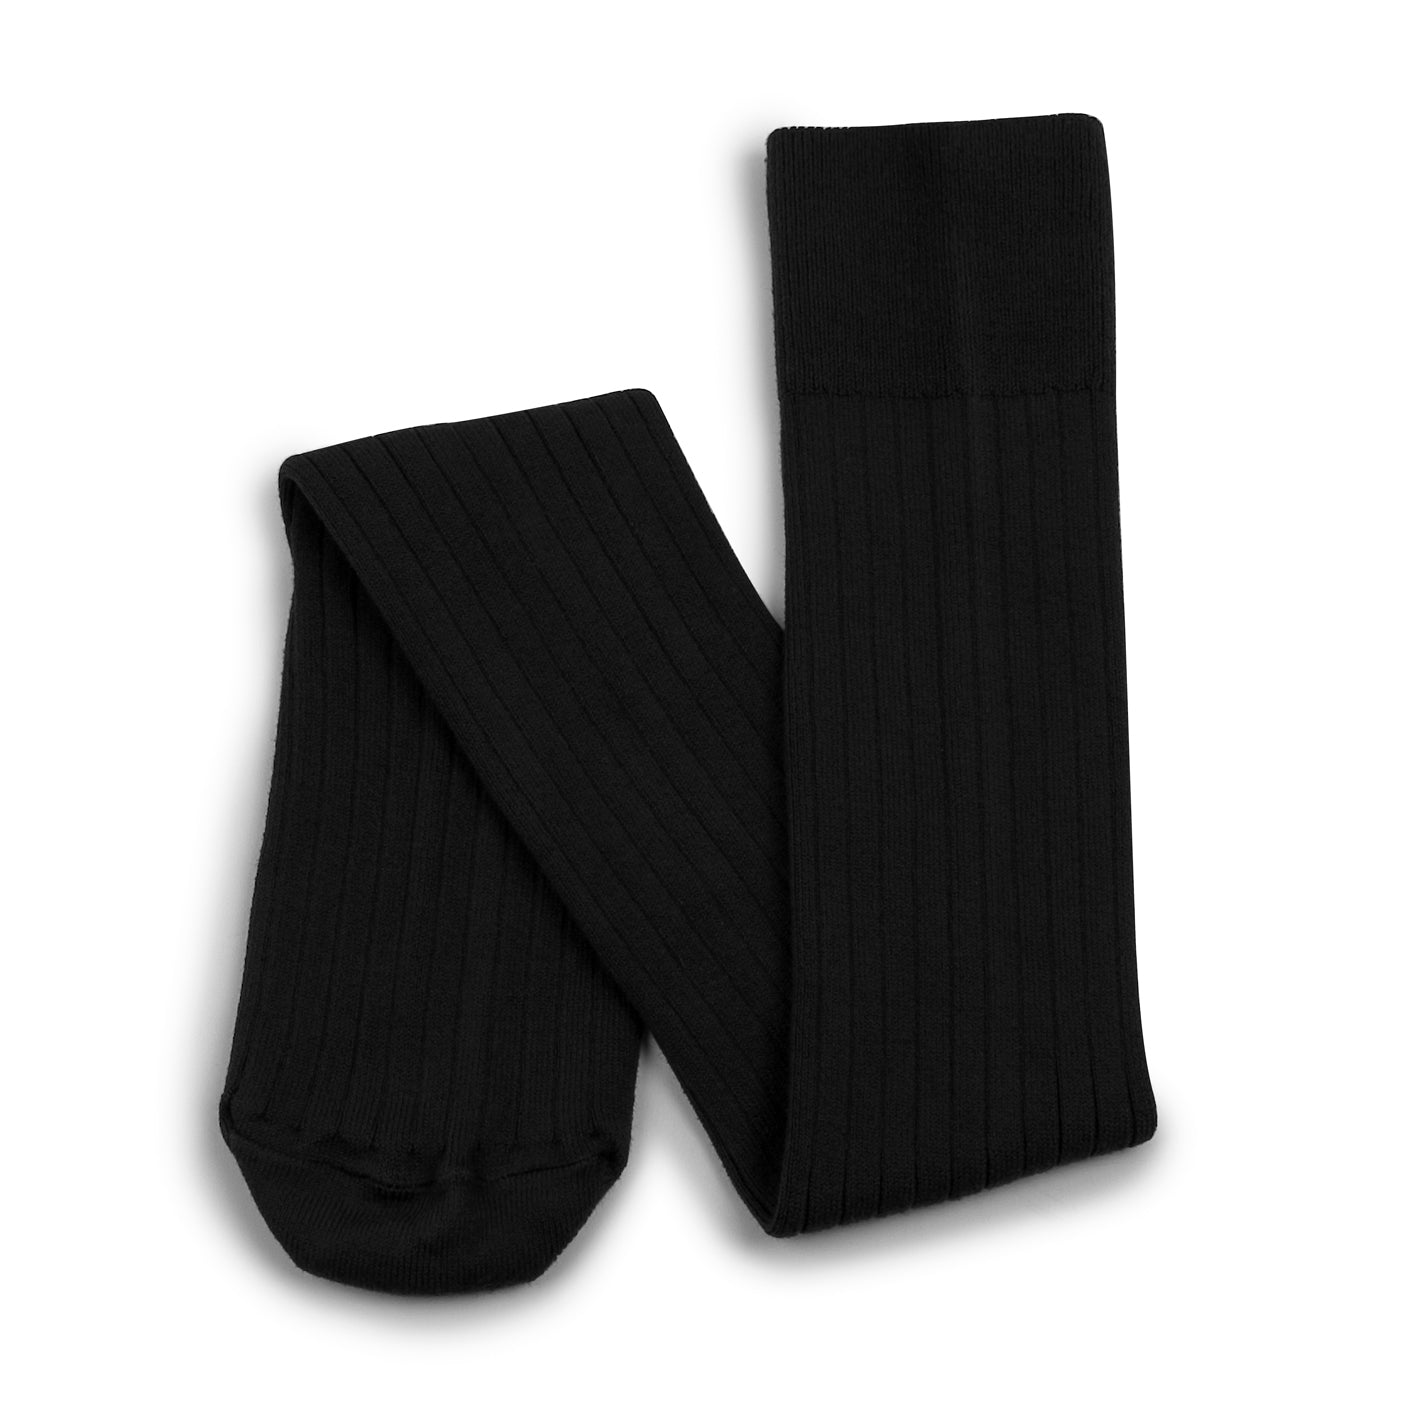 Benedicte - Thigh high socks